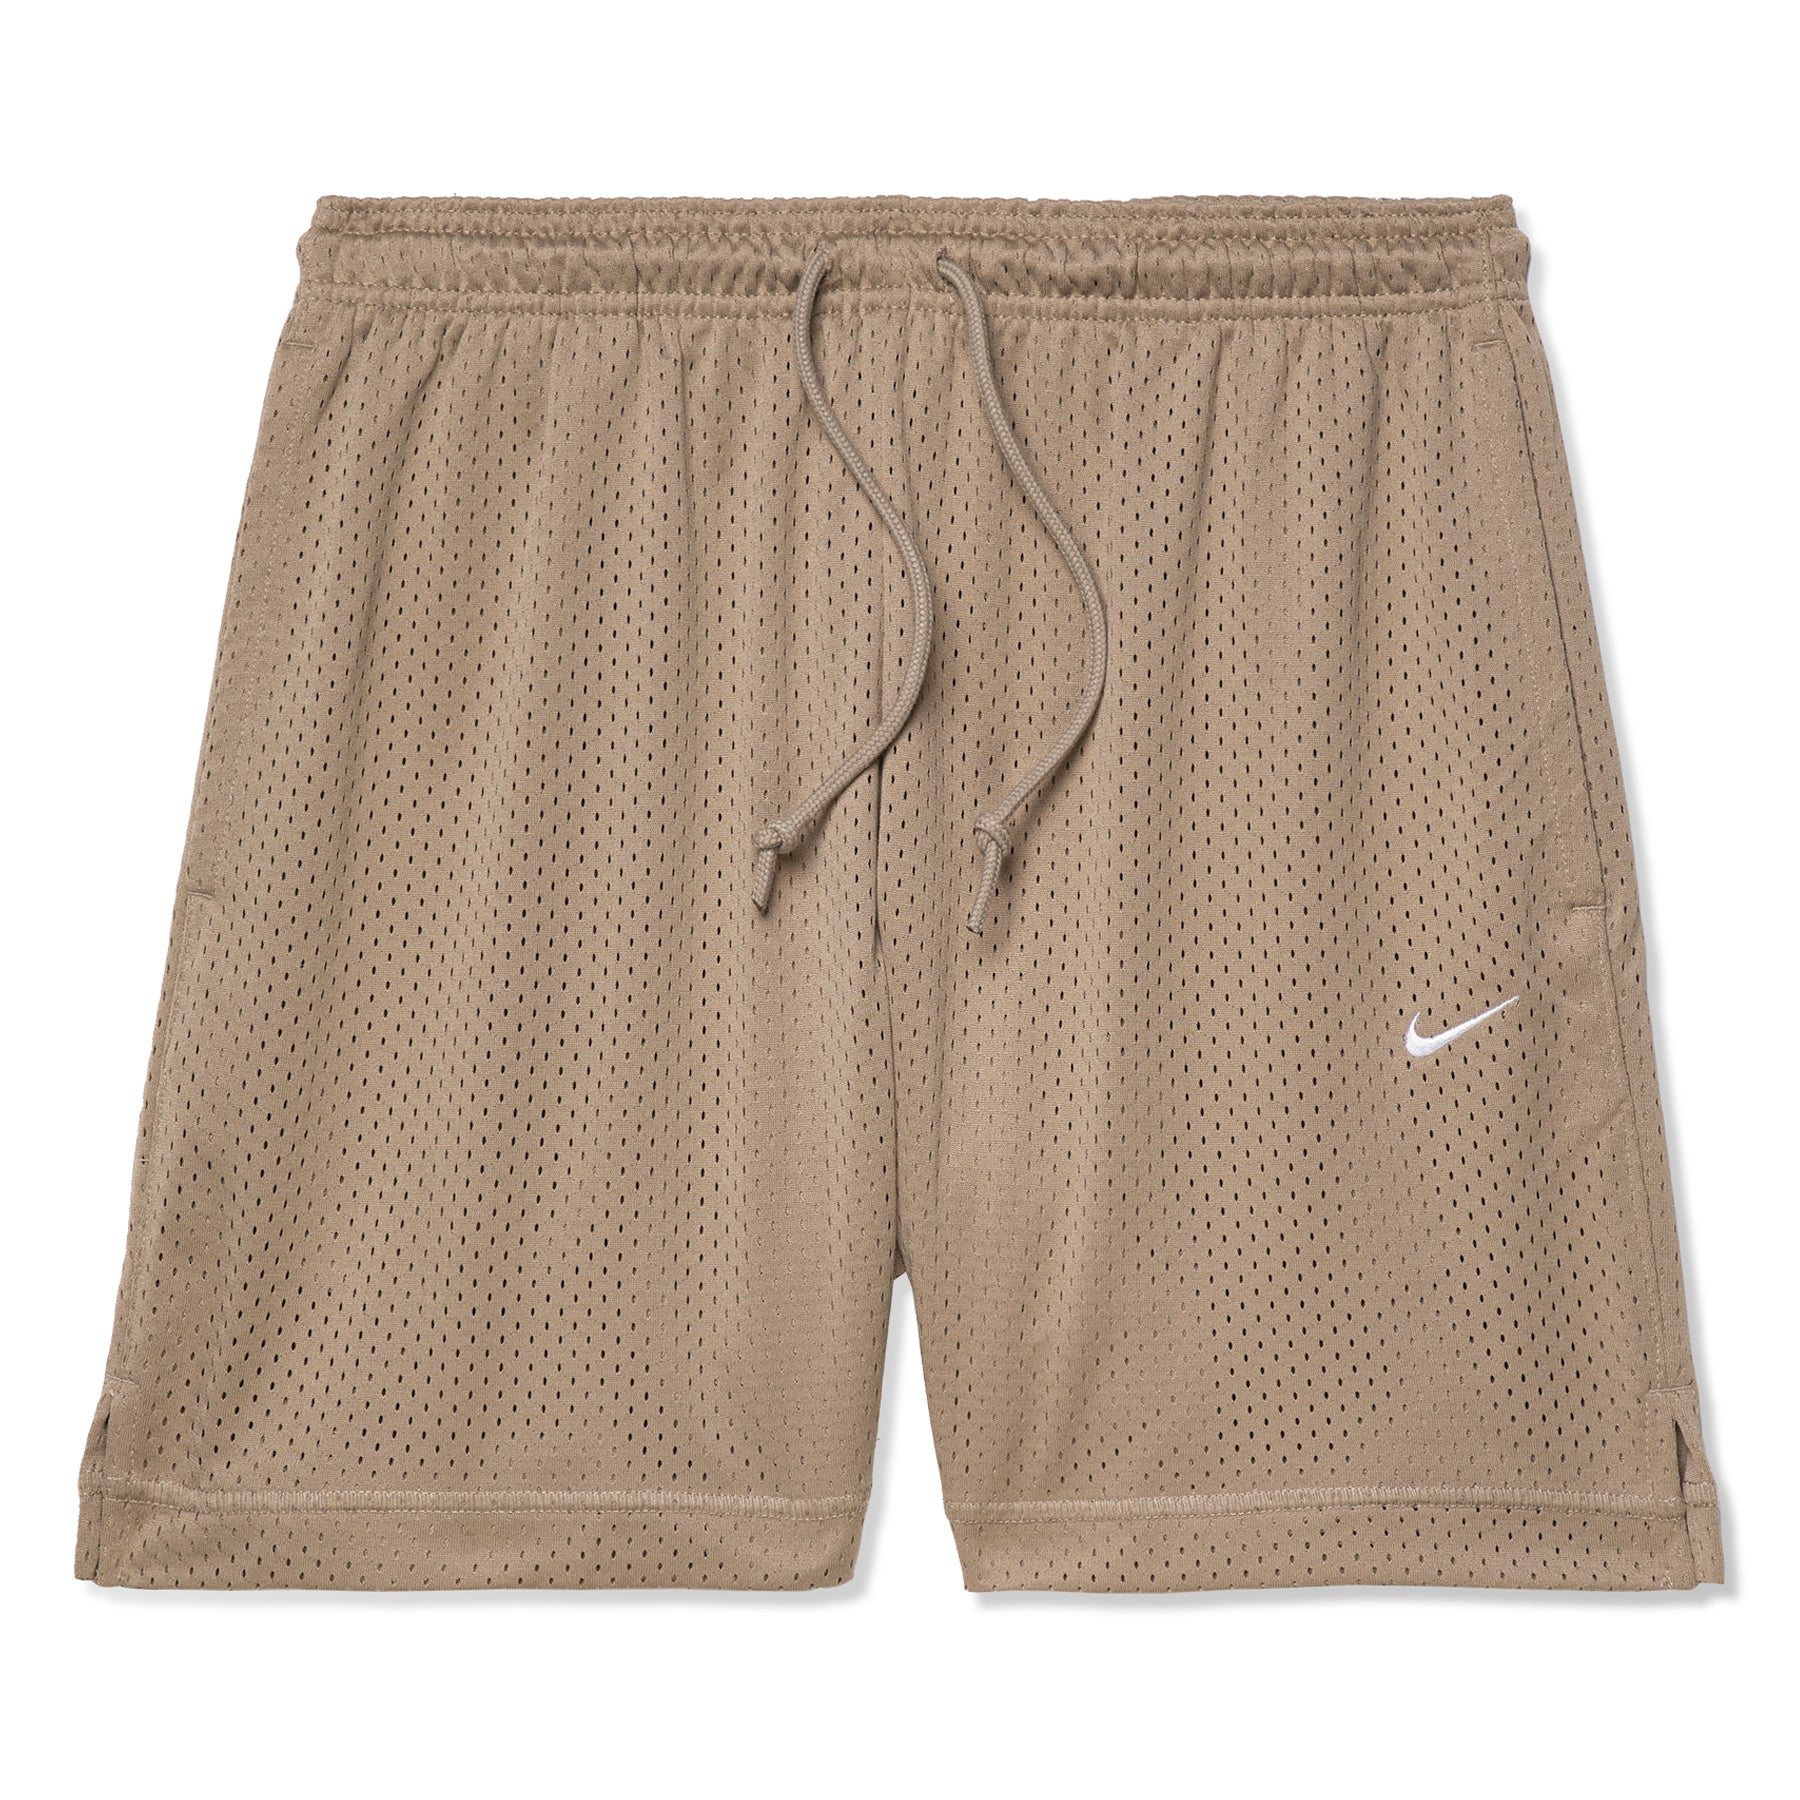 Nike – Sportswear Shorts (Khaki/White) Concepts Mesh